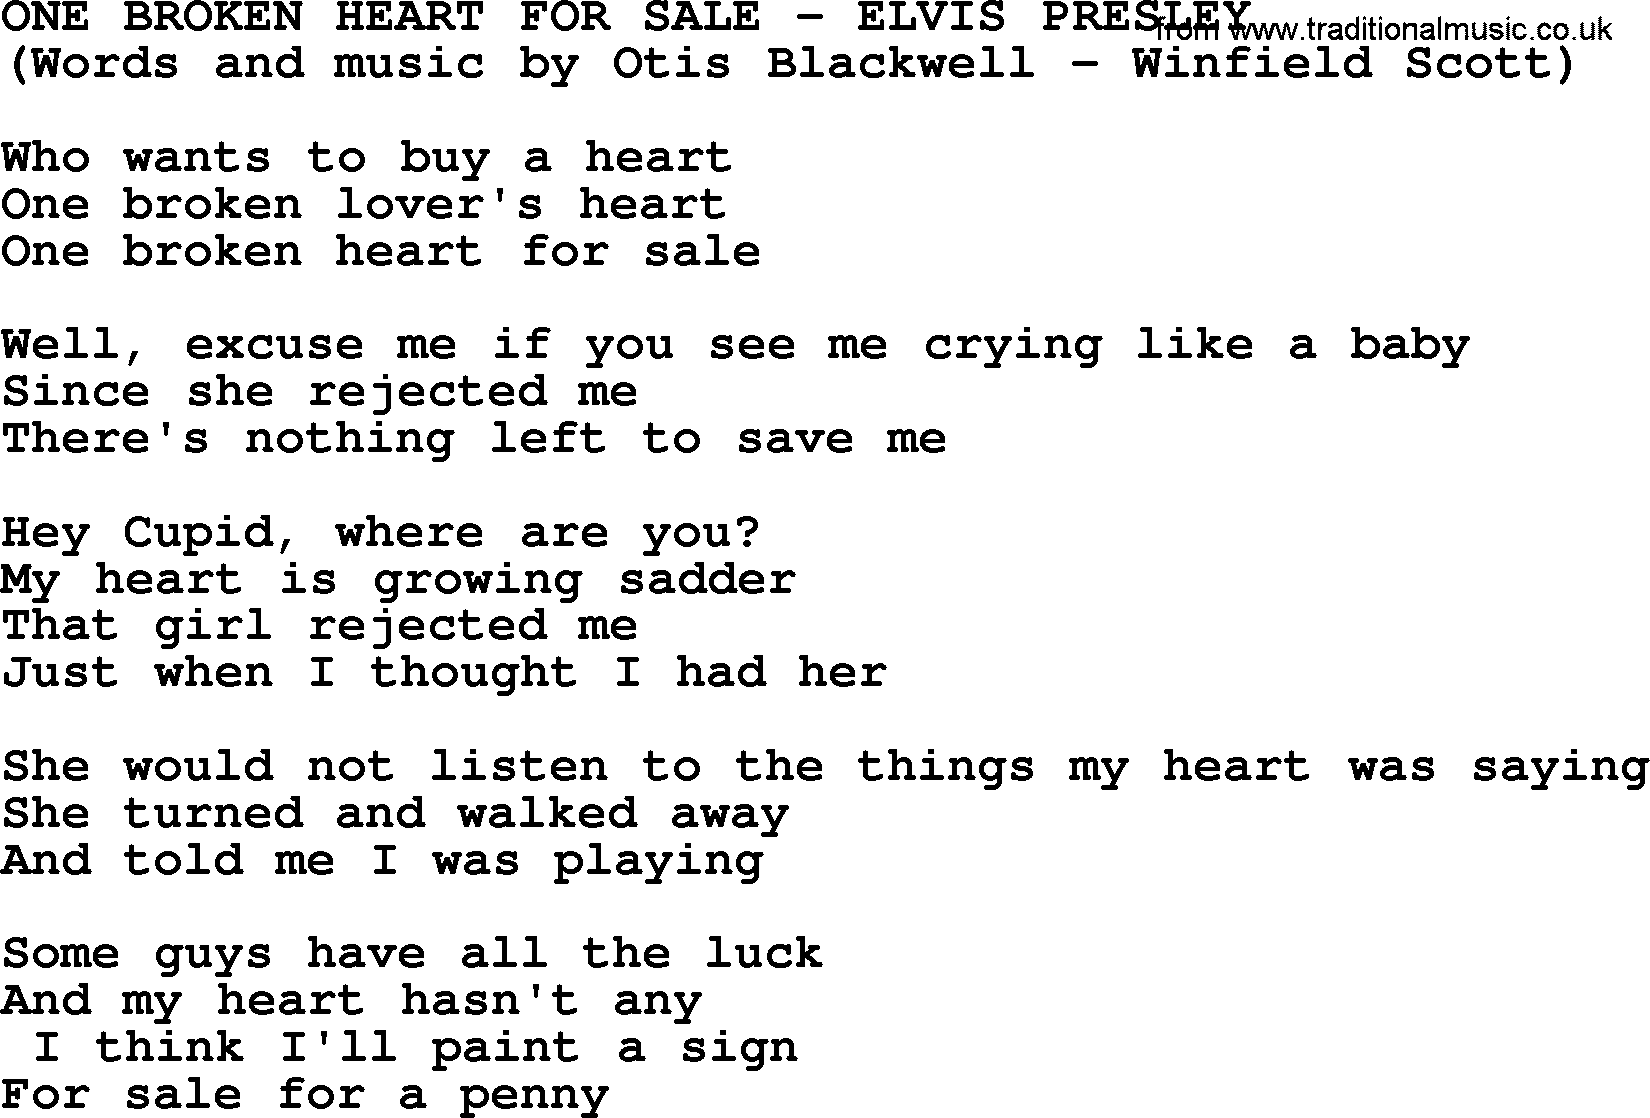 Elvis Presley song: One Broken Heart For Sale lyrics